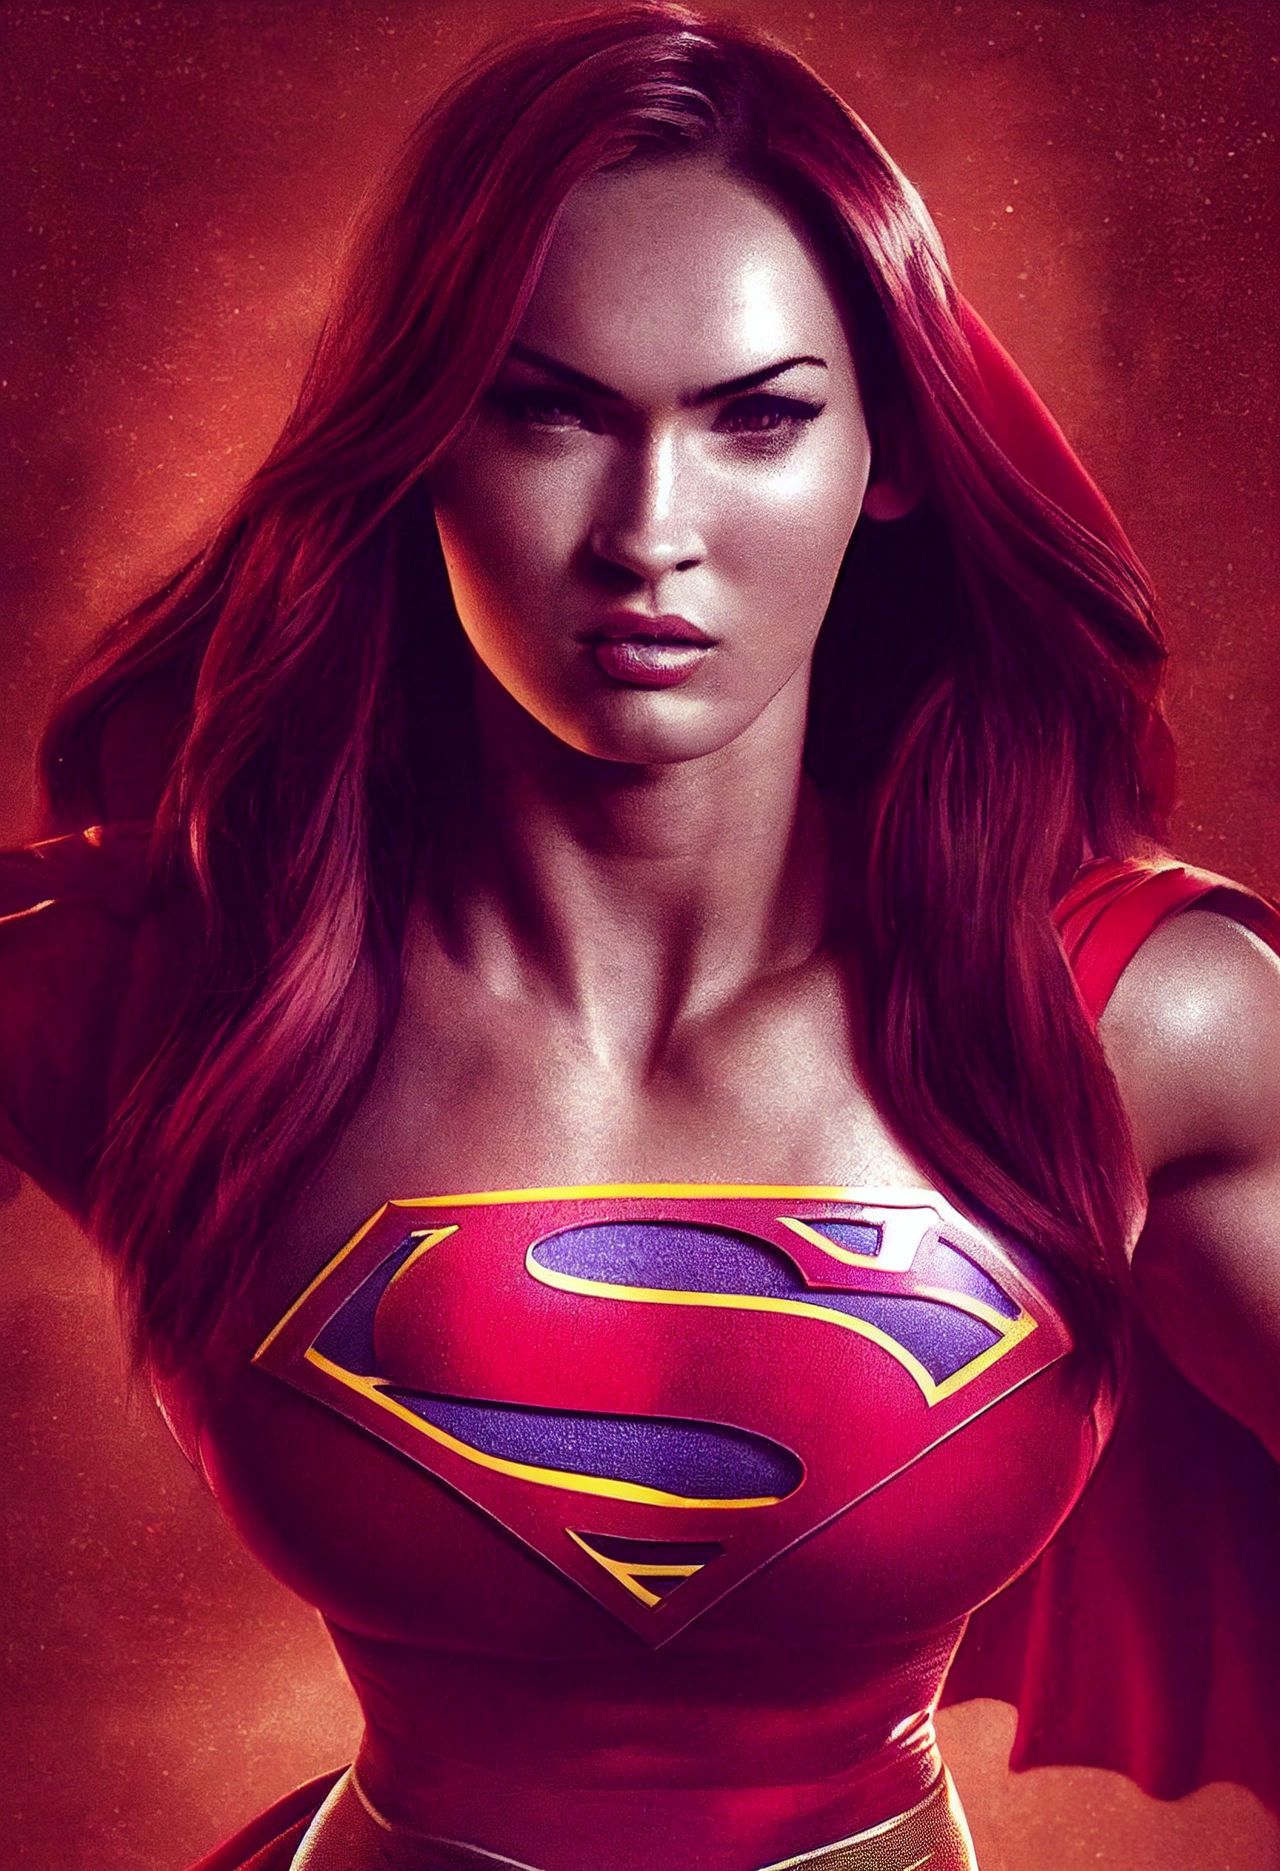 Muscular Megan Fox As Supergirl 3 By Alexapappas On Deviantart